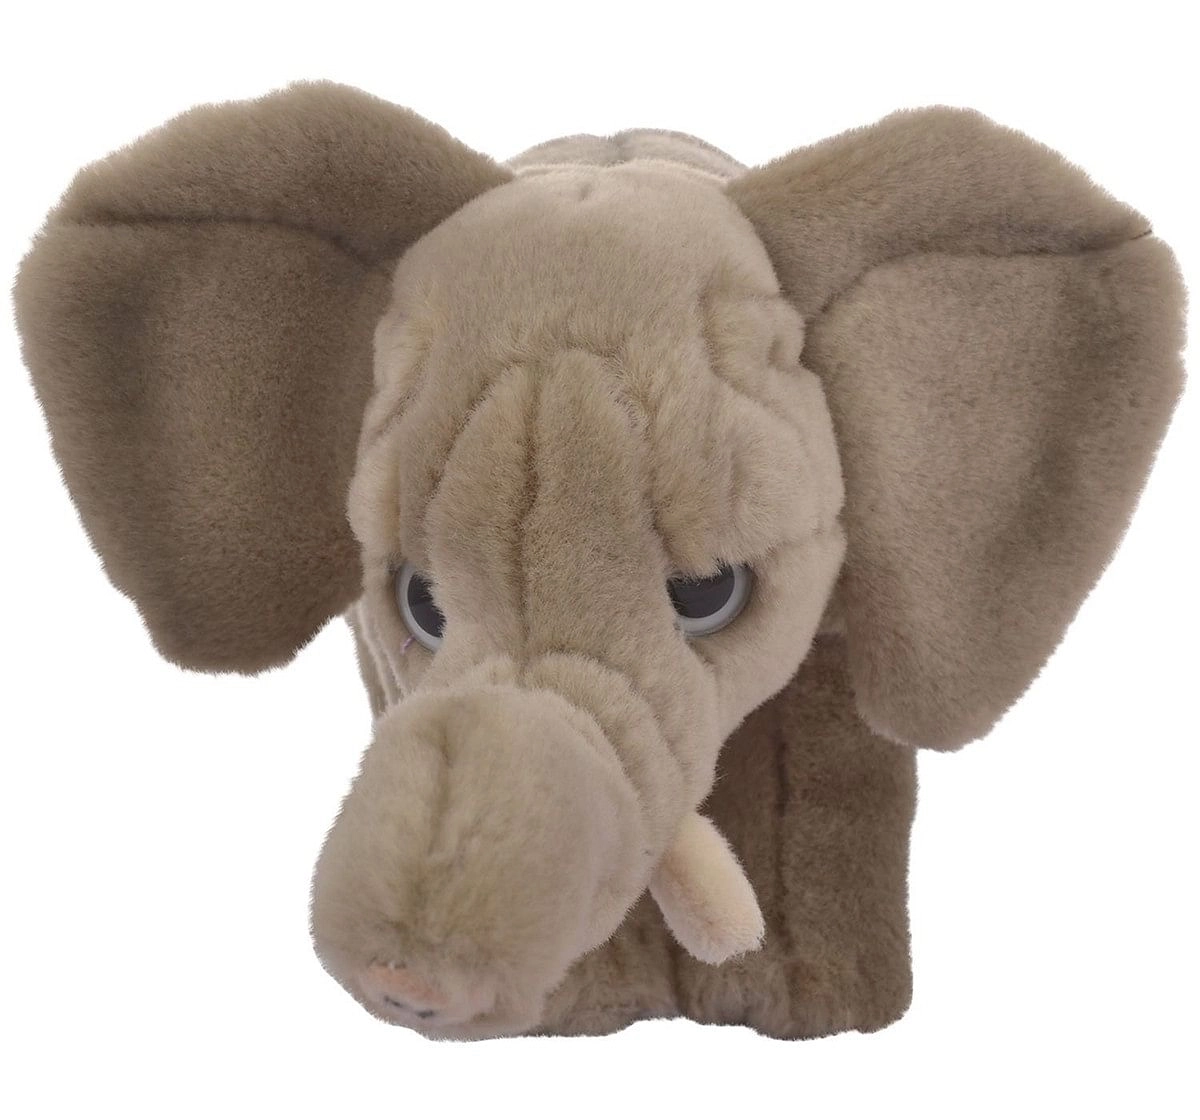 Hamleys Baby Elephant Soft Toy, Grey (4-Inch) Animals & Birds for Kids age 0M+ - 10 Cm (Grey)